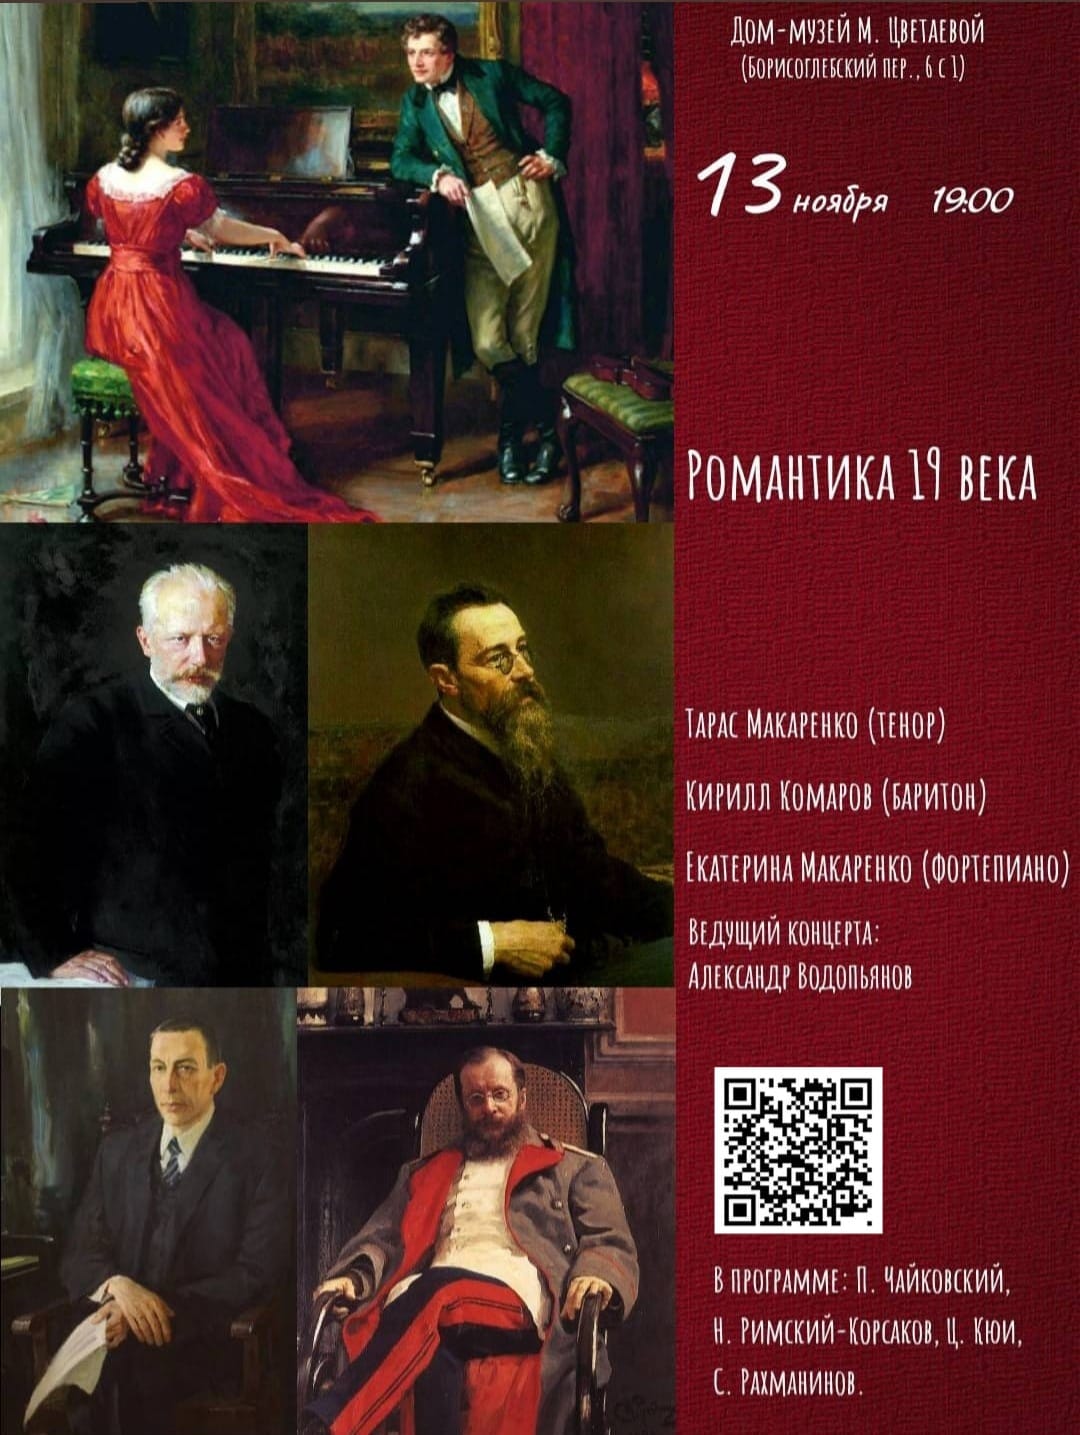 Иллюстрация: Концерт «Романтика XIX века»